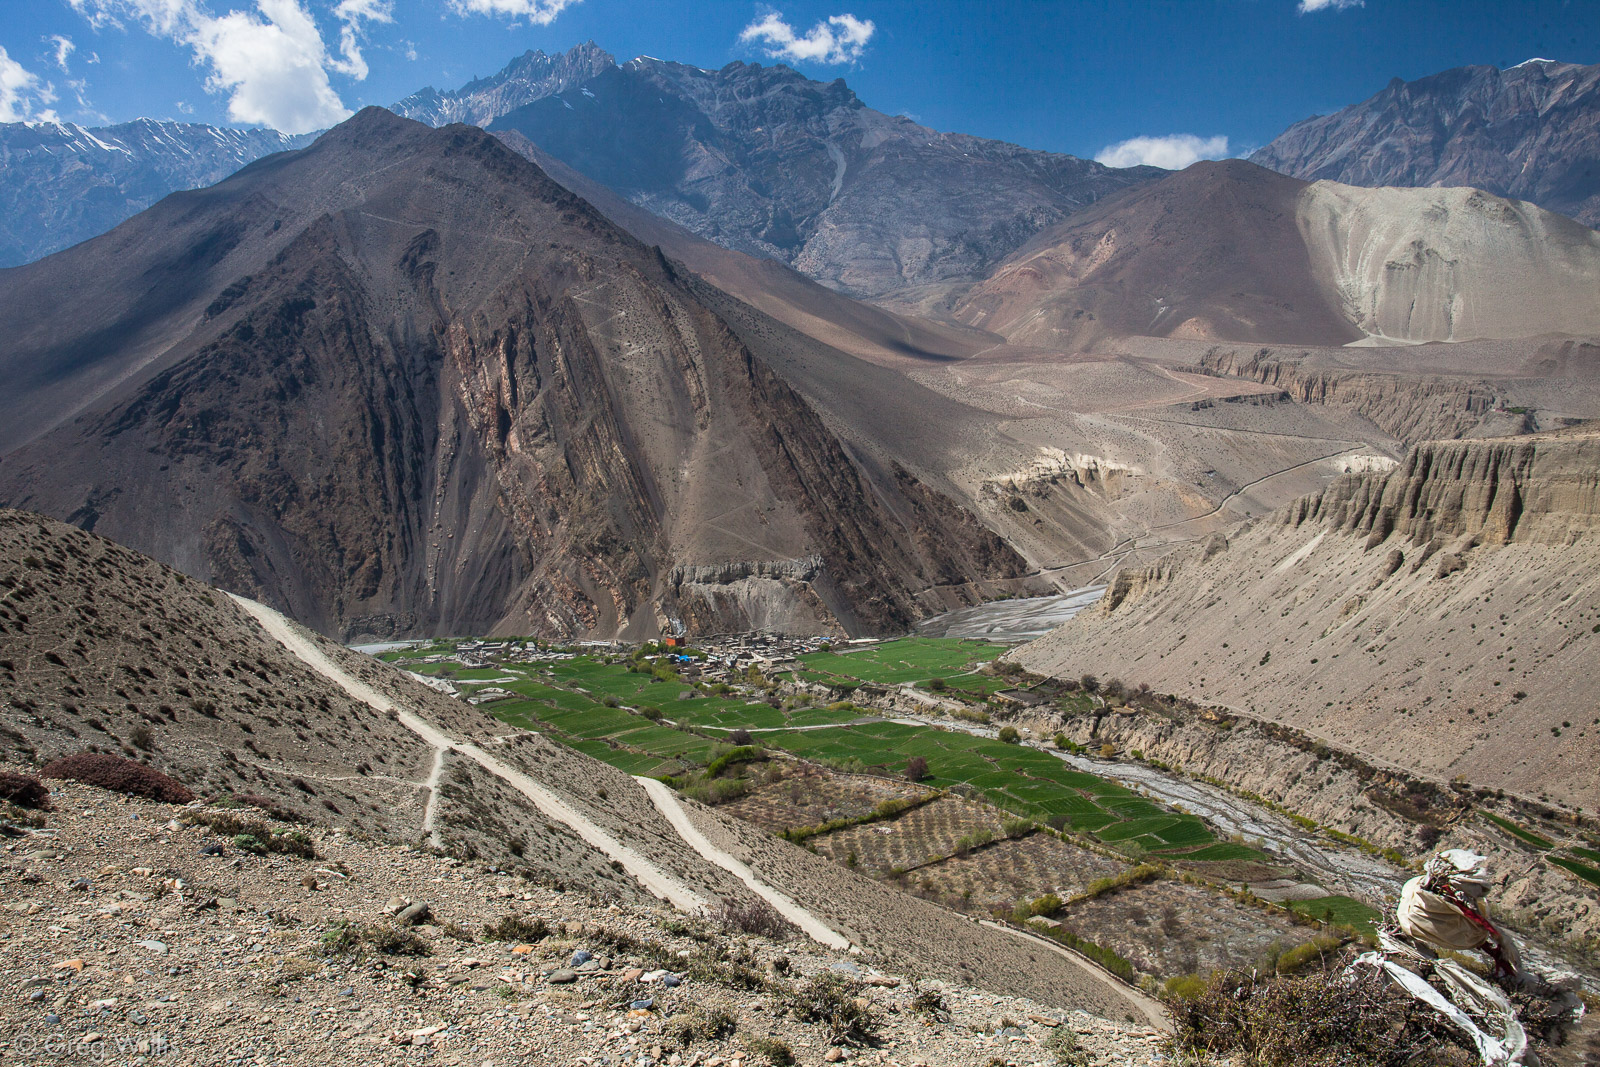 Kagbeni and the Kali Gandaki river